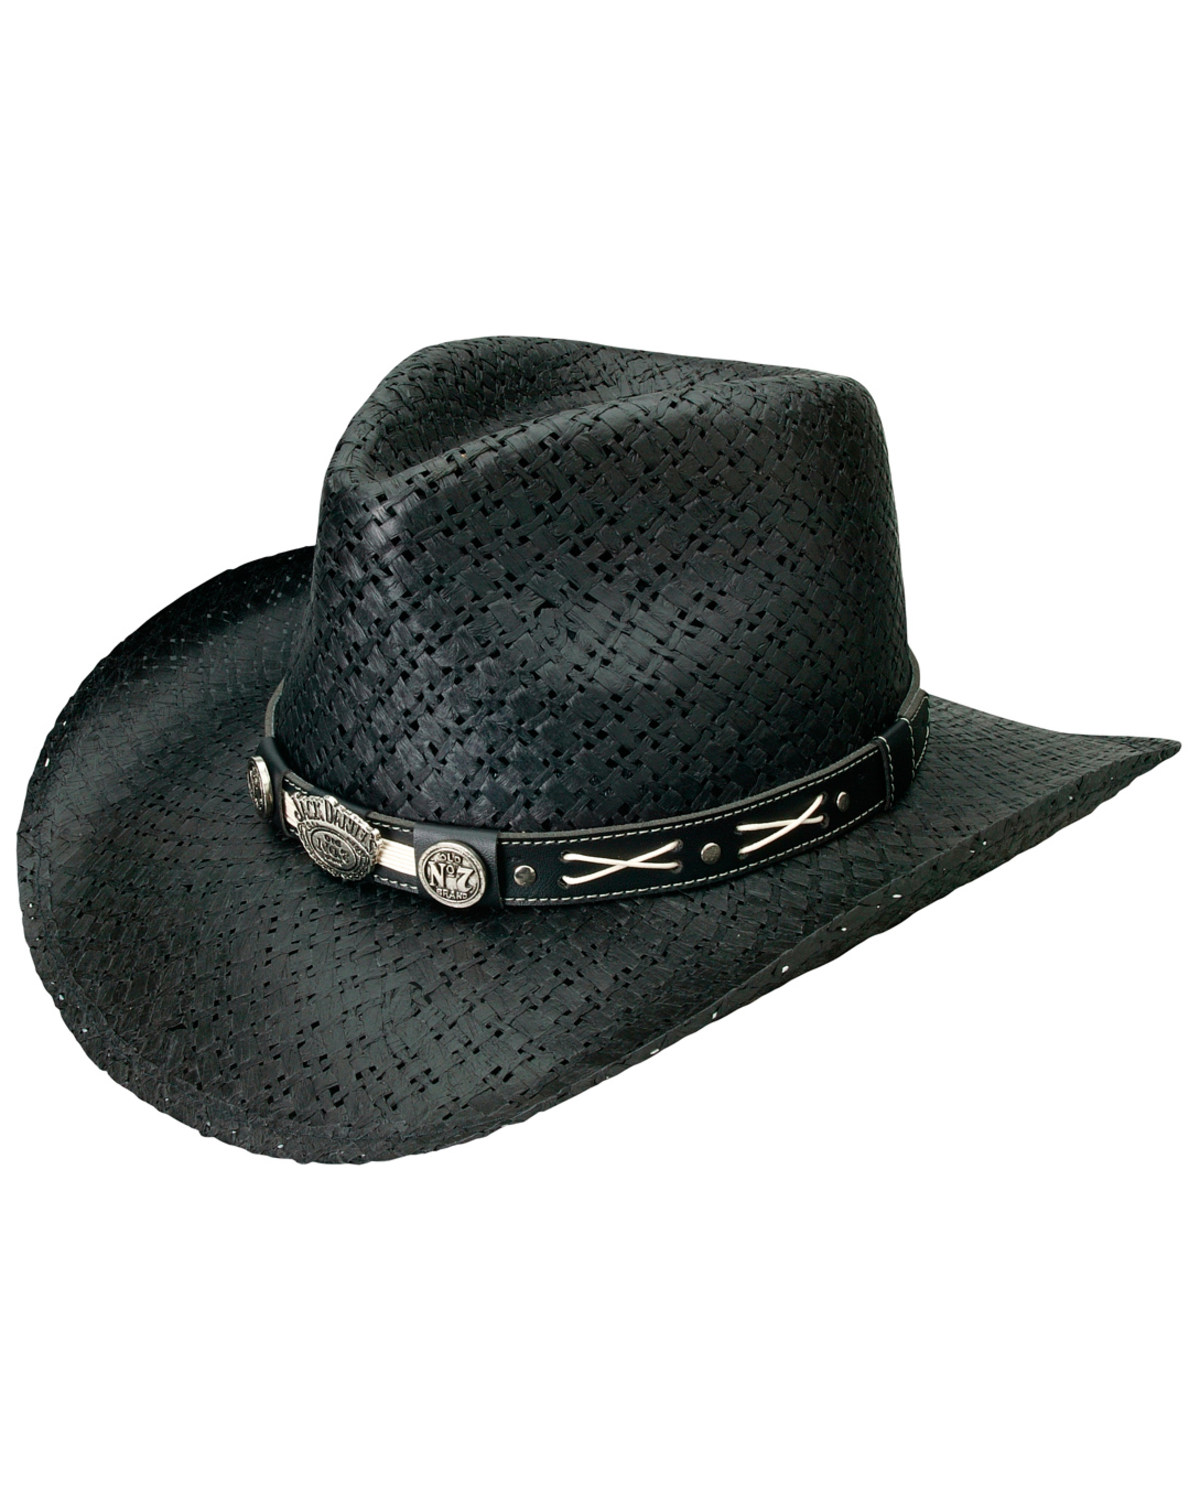 Jack Daniel's Straw Cowboy Hat